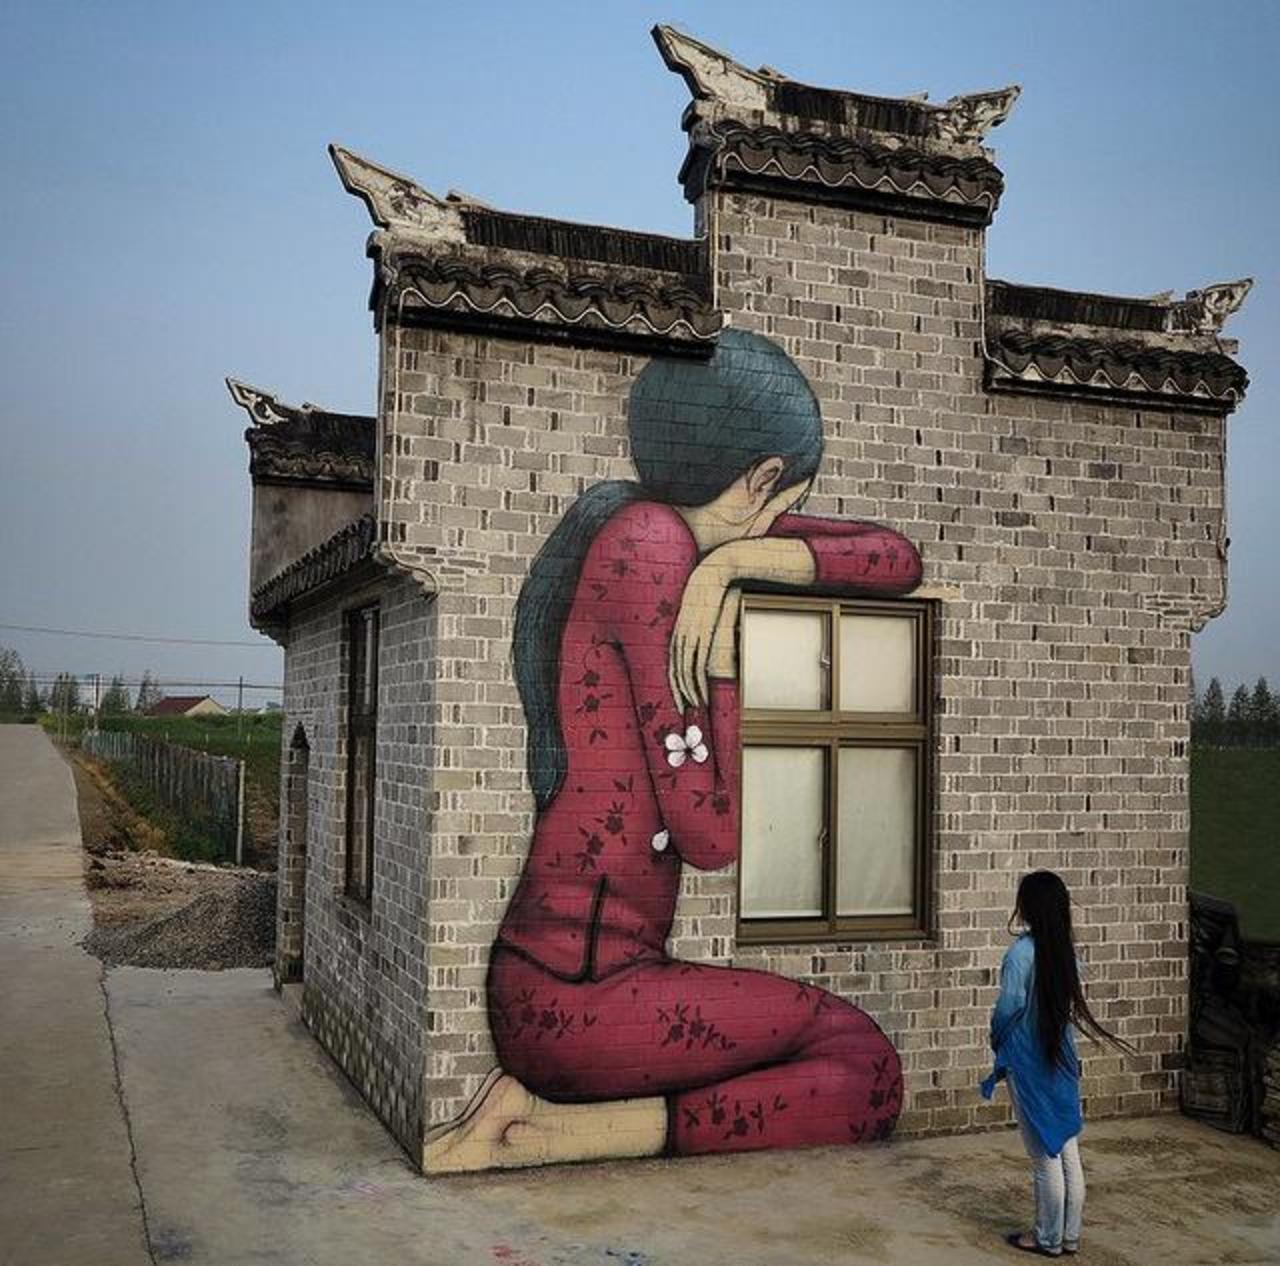 New Street Art by Seth Globepainter in Fengzing, China 

#art #arte #graffiti #streetart http://t.co/cYGEuNpYwi